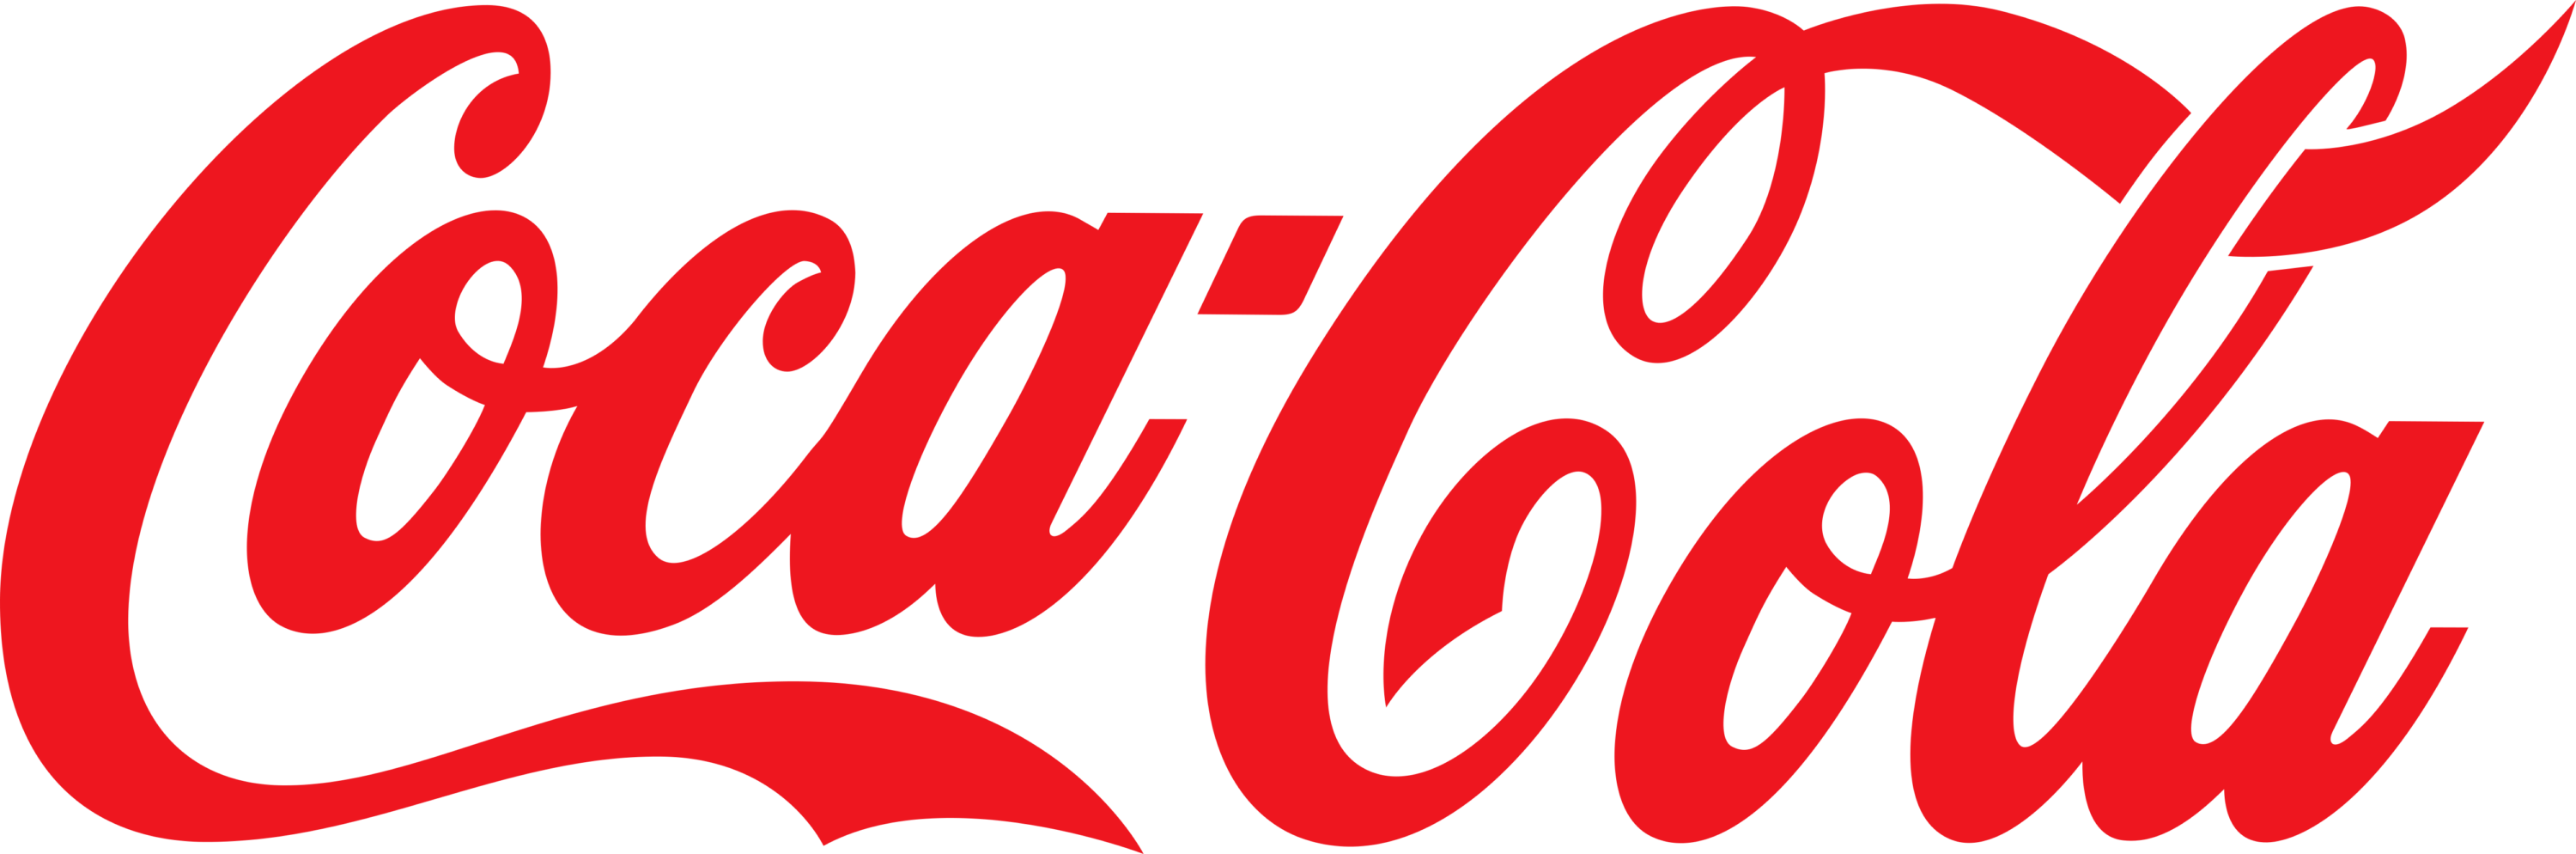 Coca Cola Logo 1986